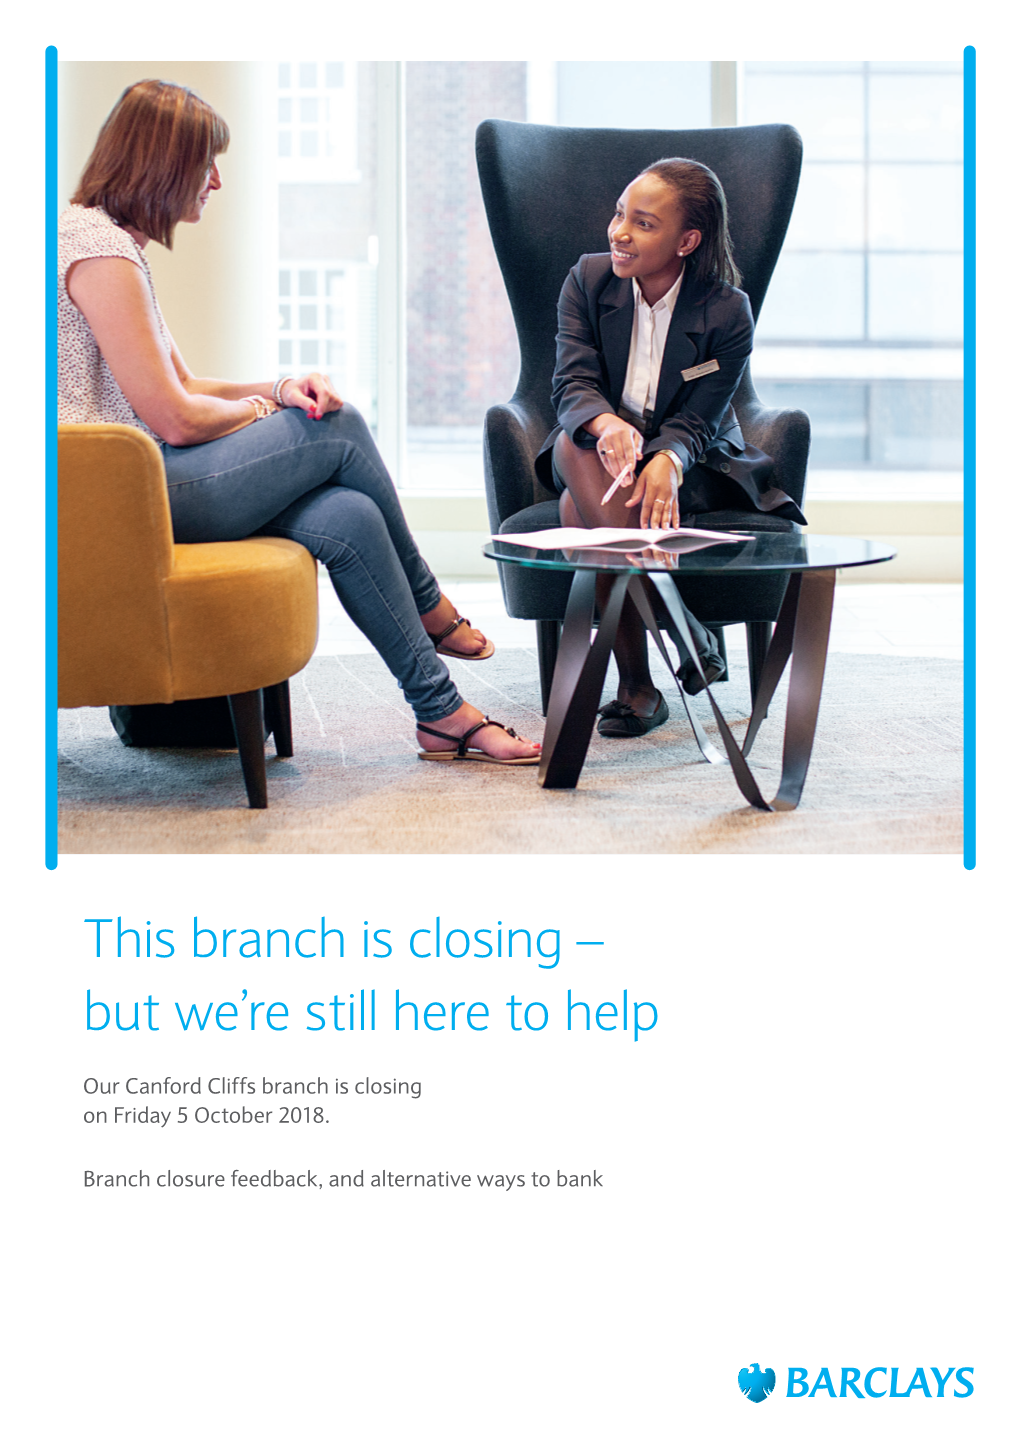 Branch Closure Feedback, and Alternative Ways to Bank